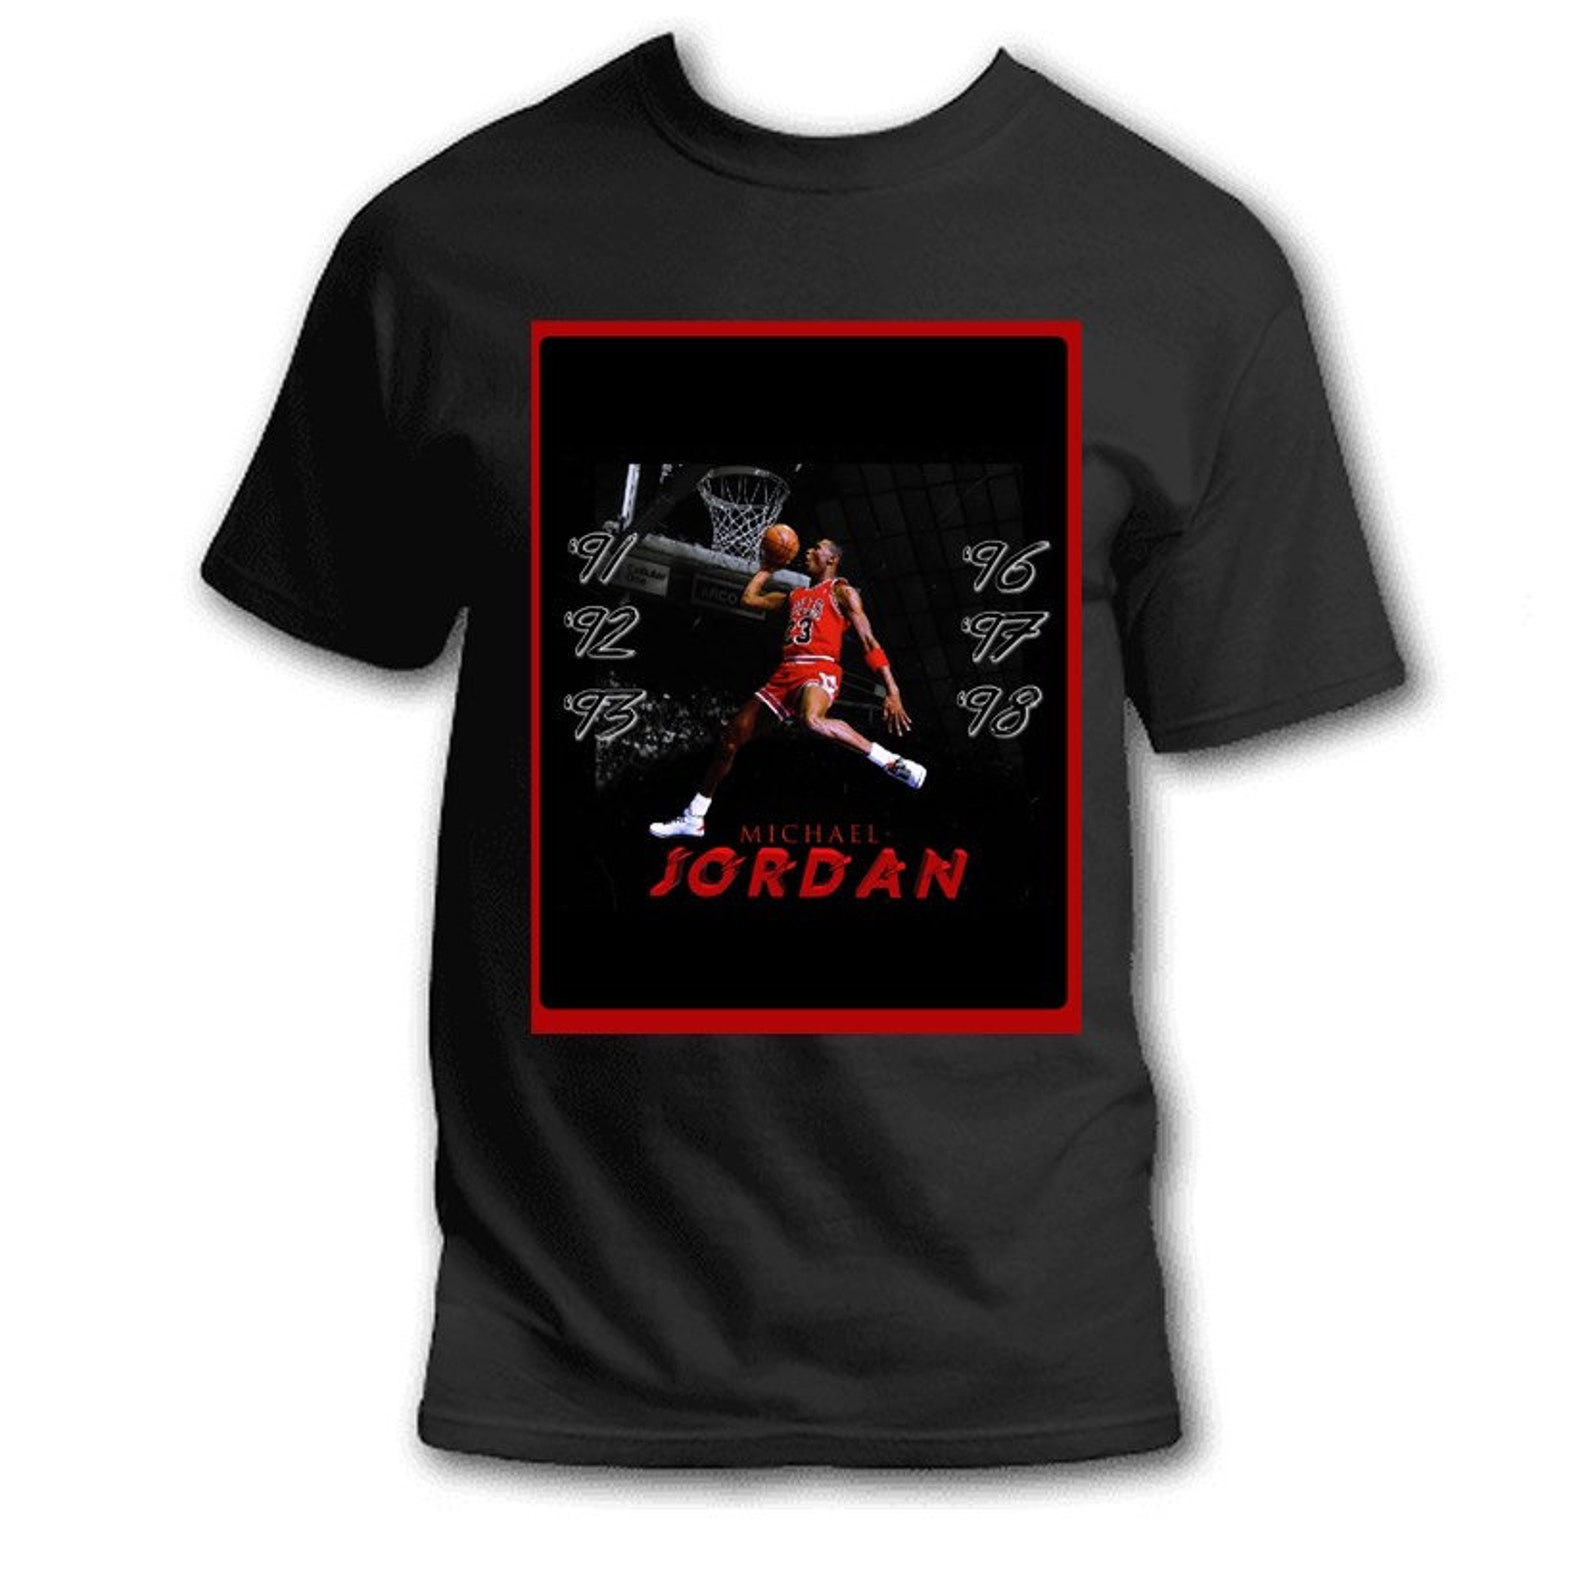 Michael Jordan 6 Rings T-Shirt Vintage Unisex Tee Black Red | Etsy